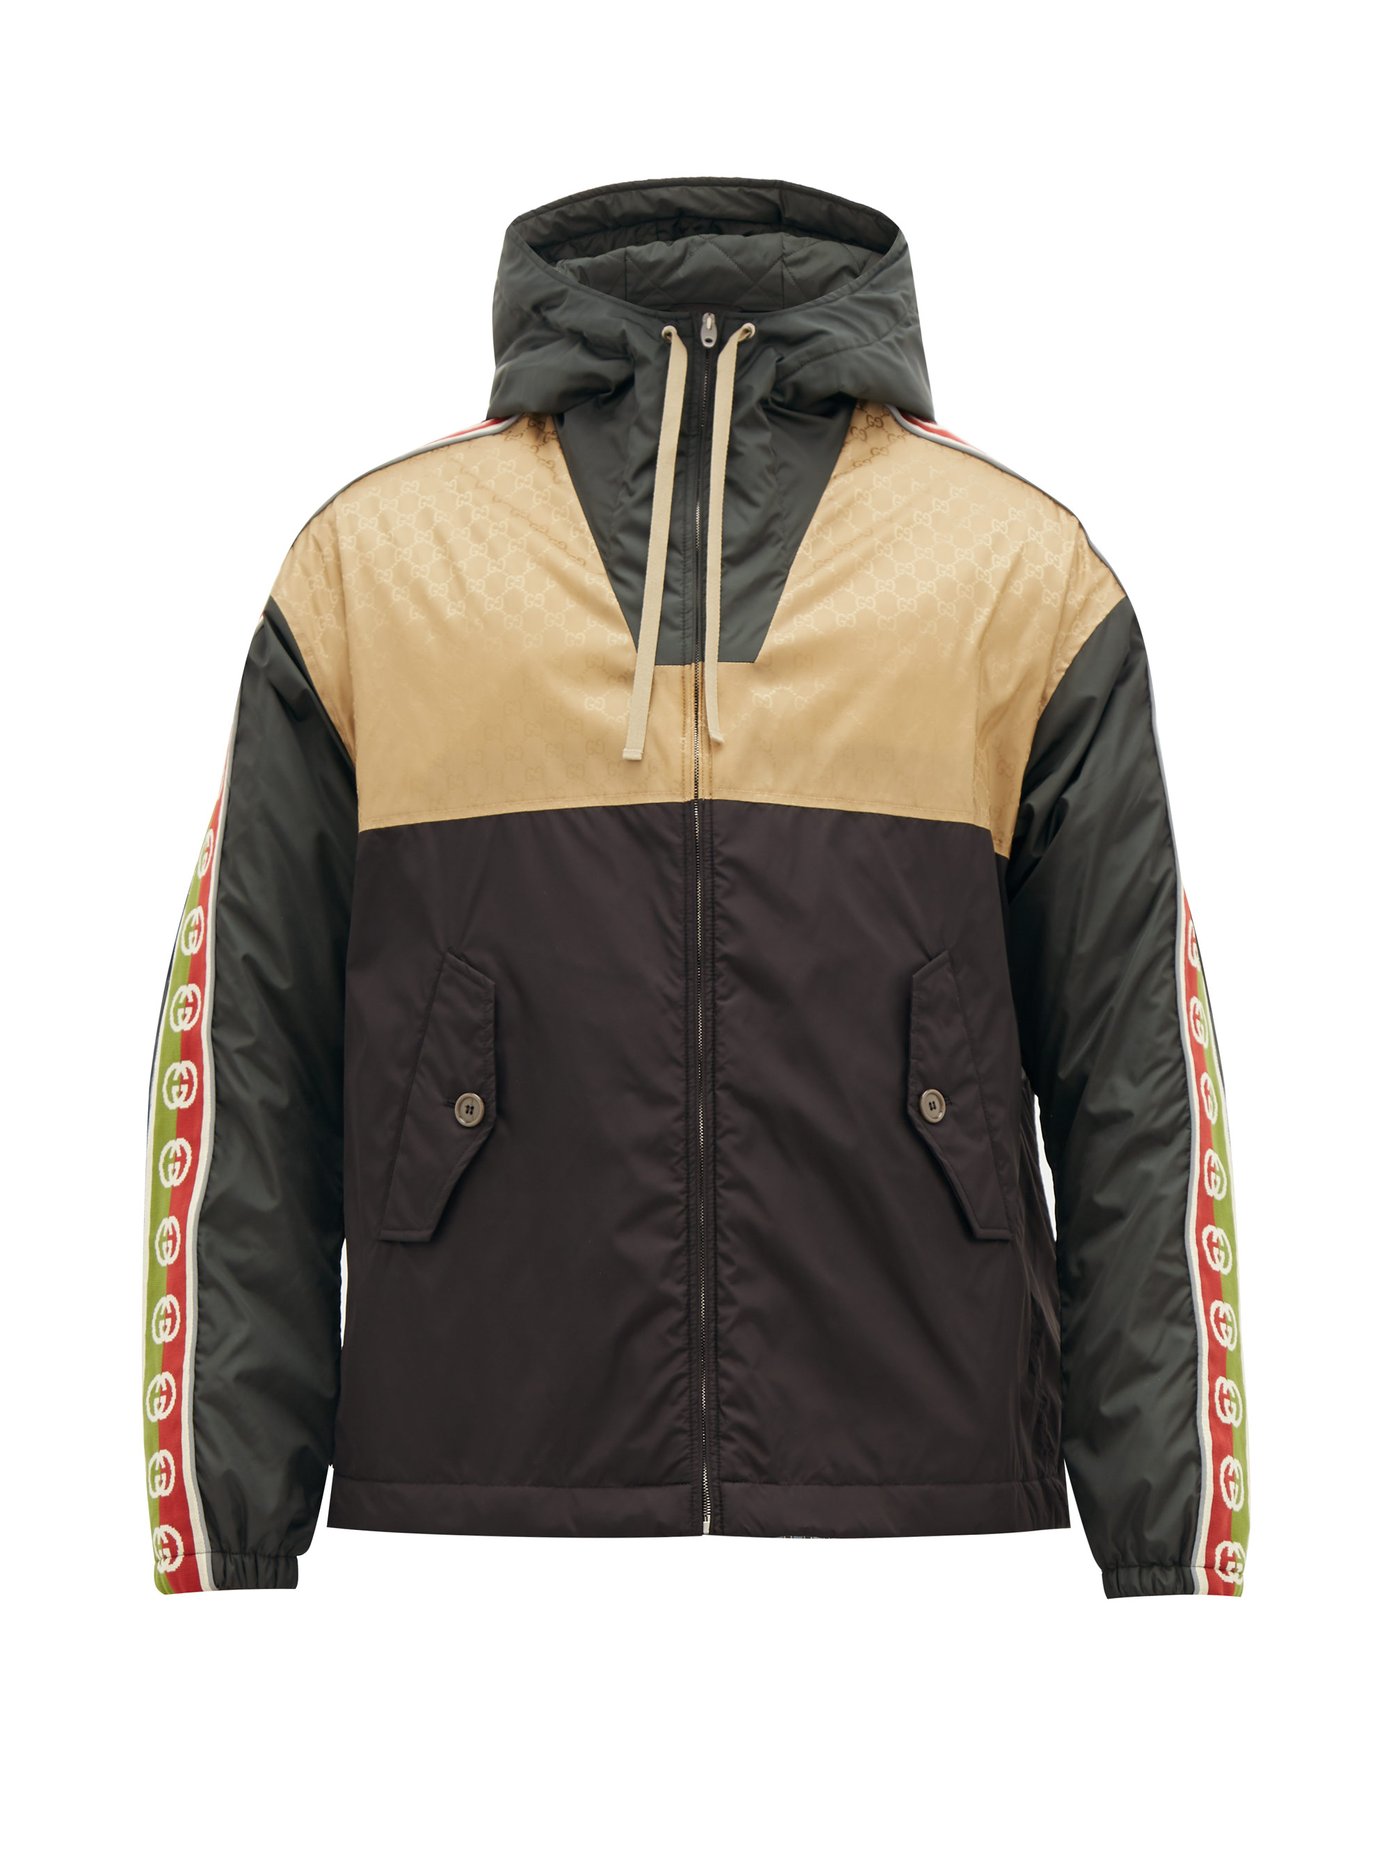 gucci windbreaker jacket